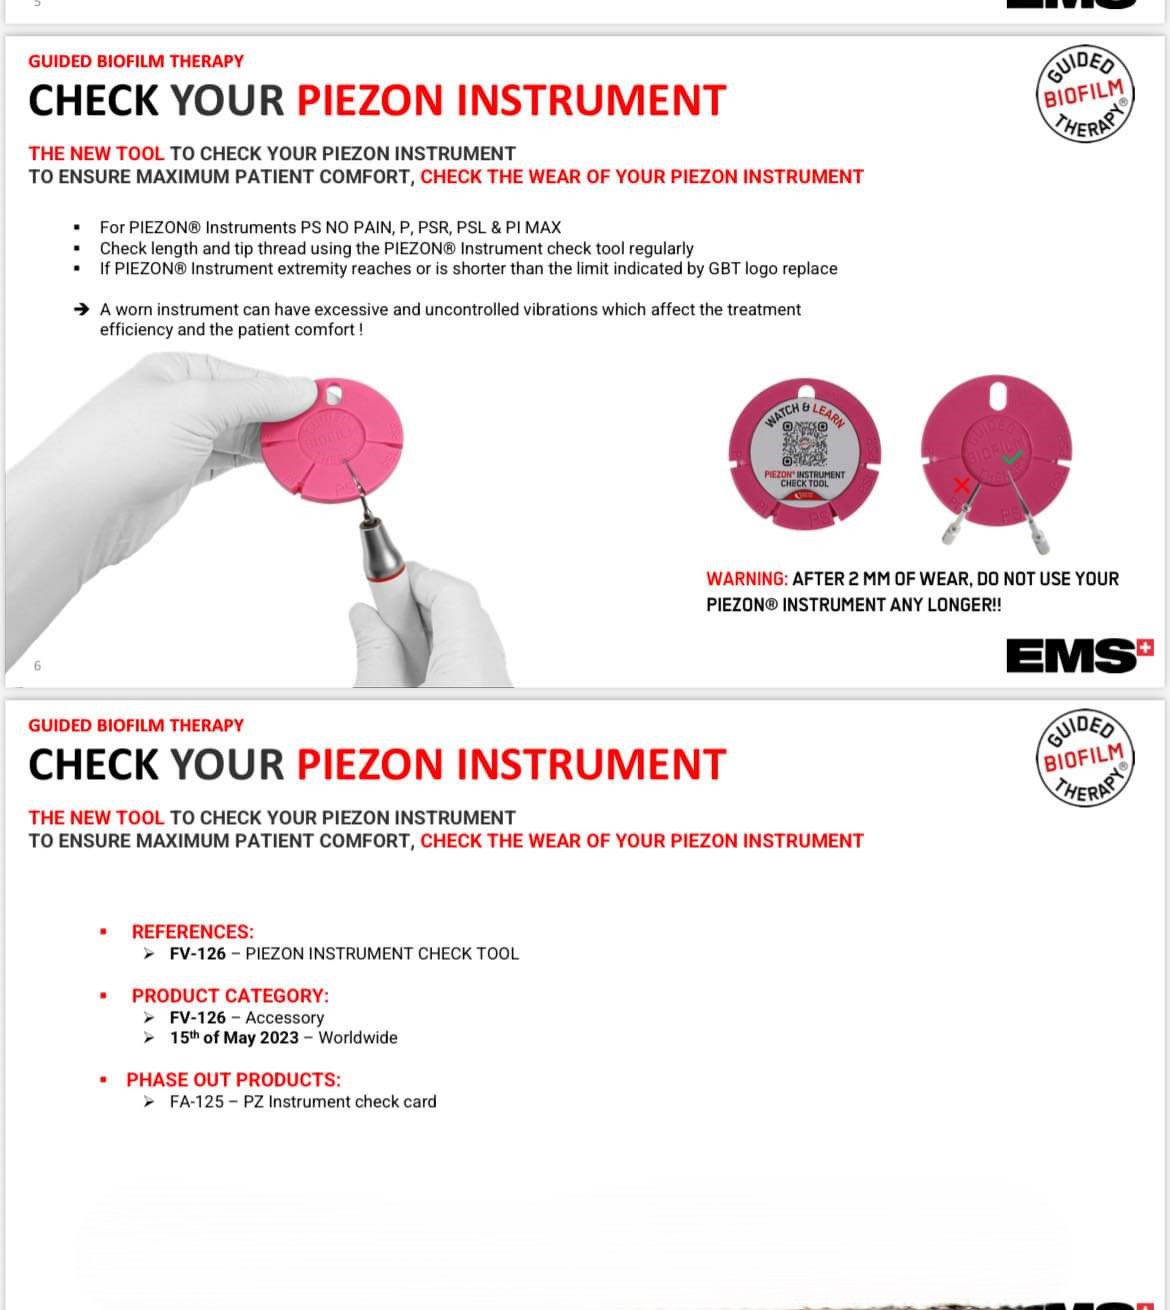 Piezon instrument check tool